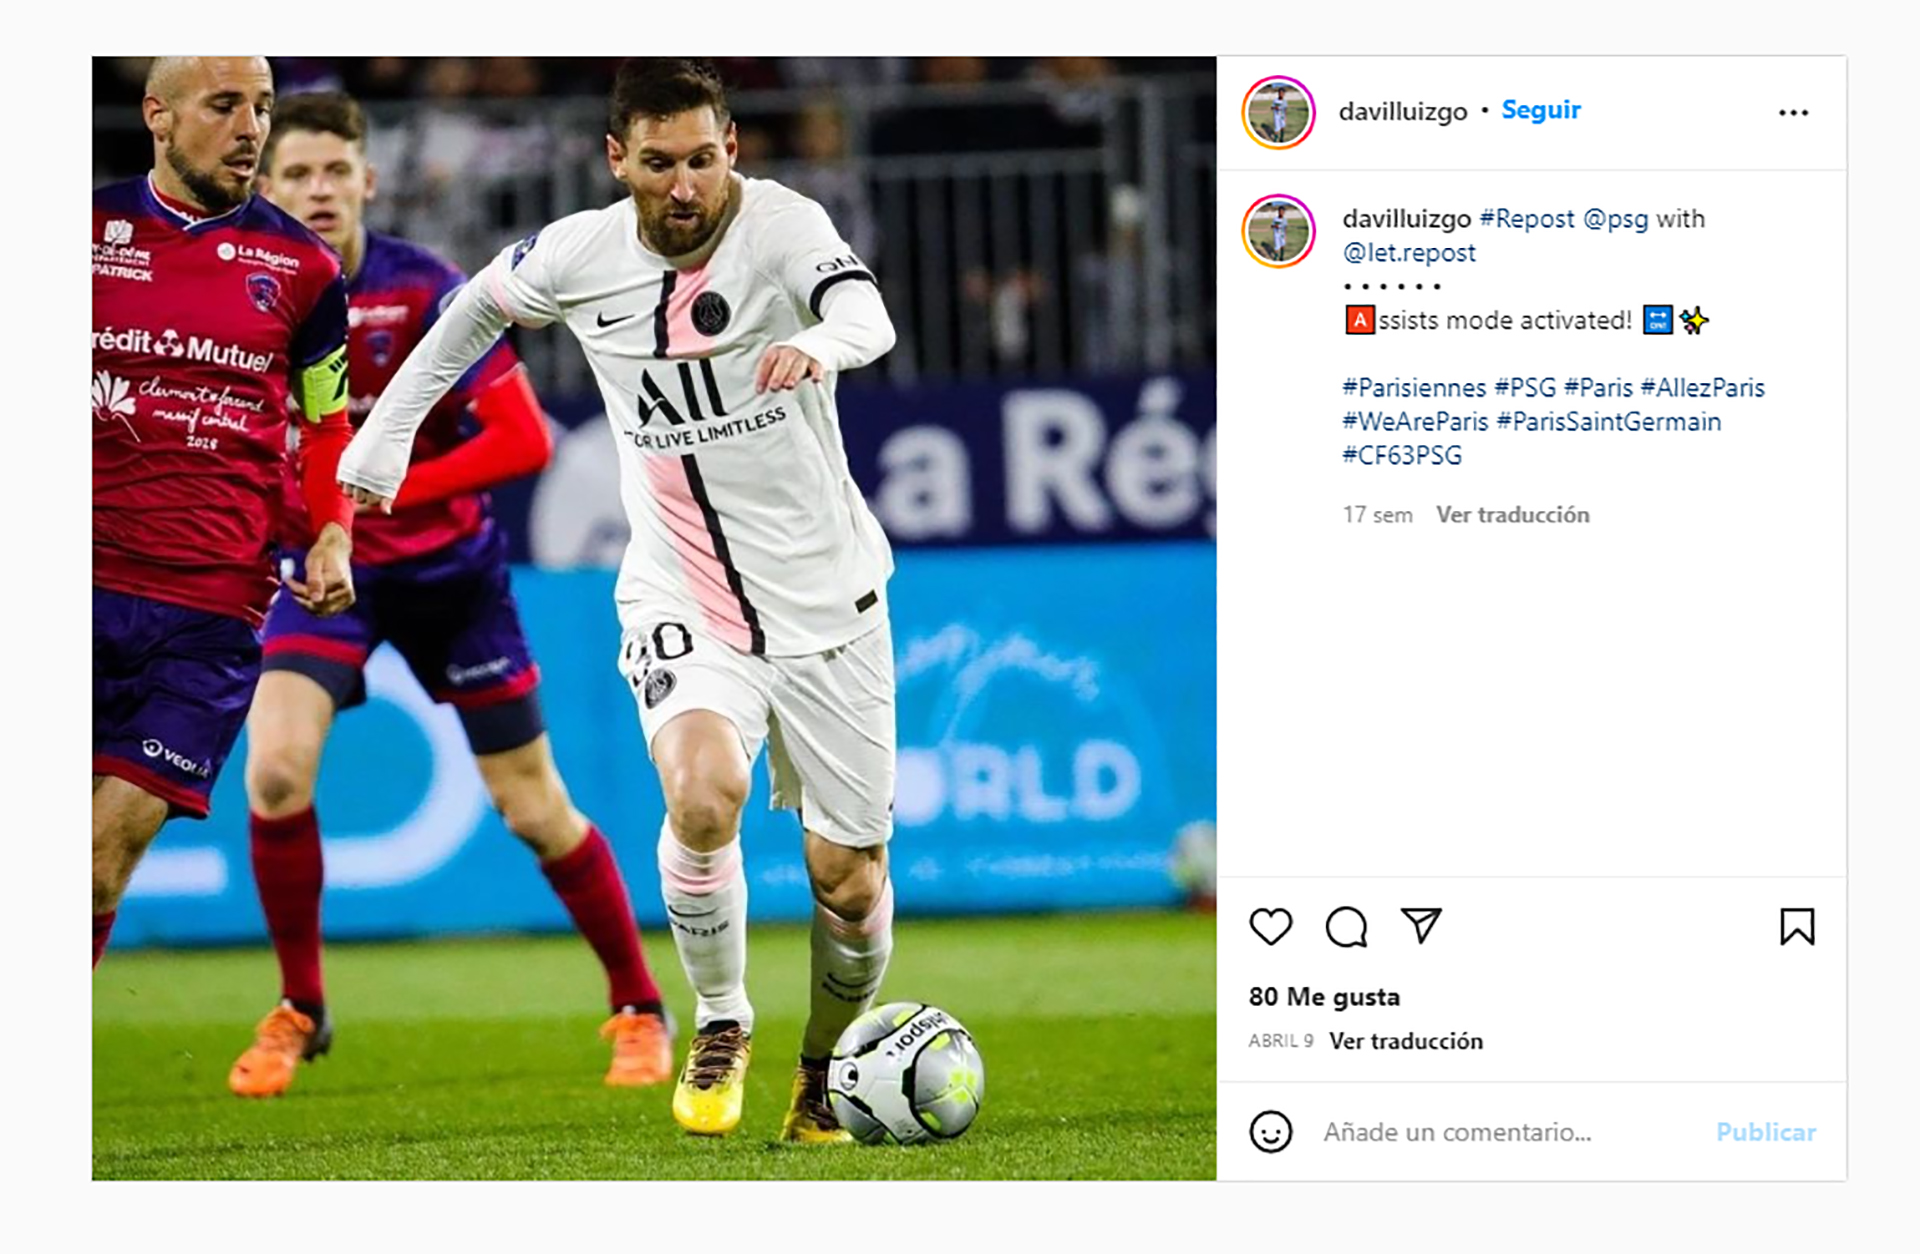 Davi's post about Messi (@davilluizgo)